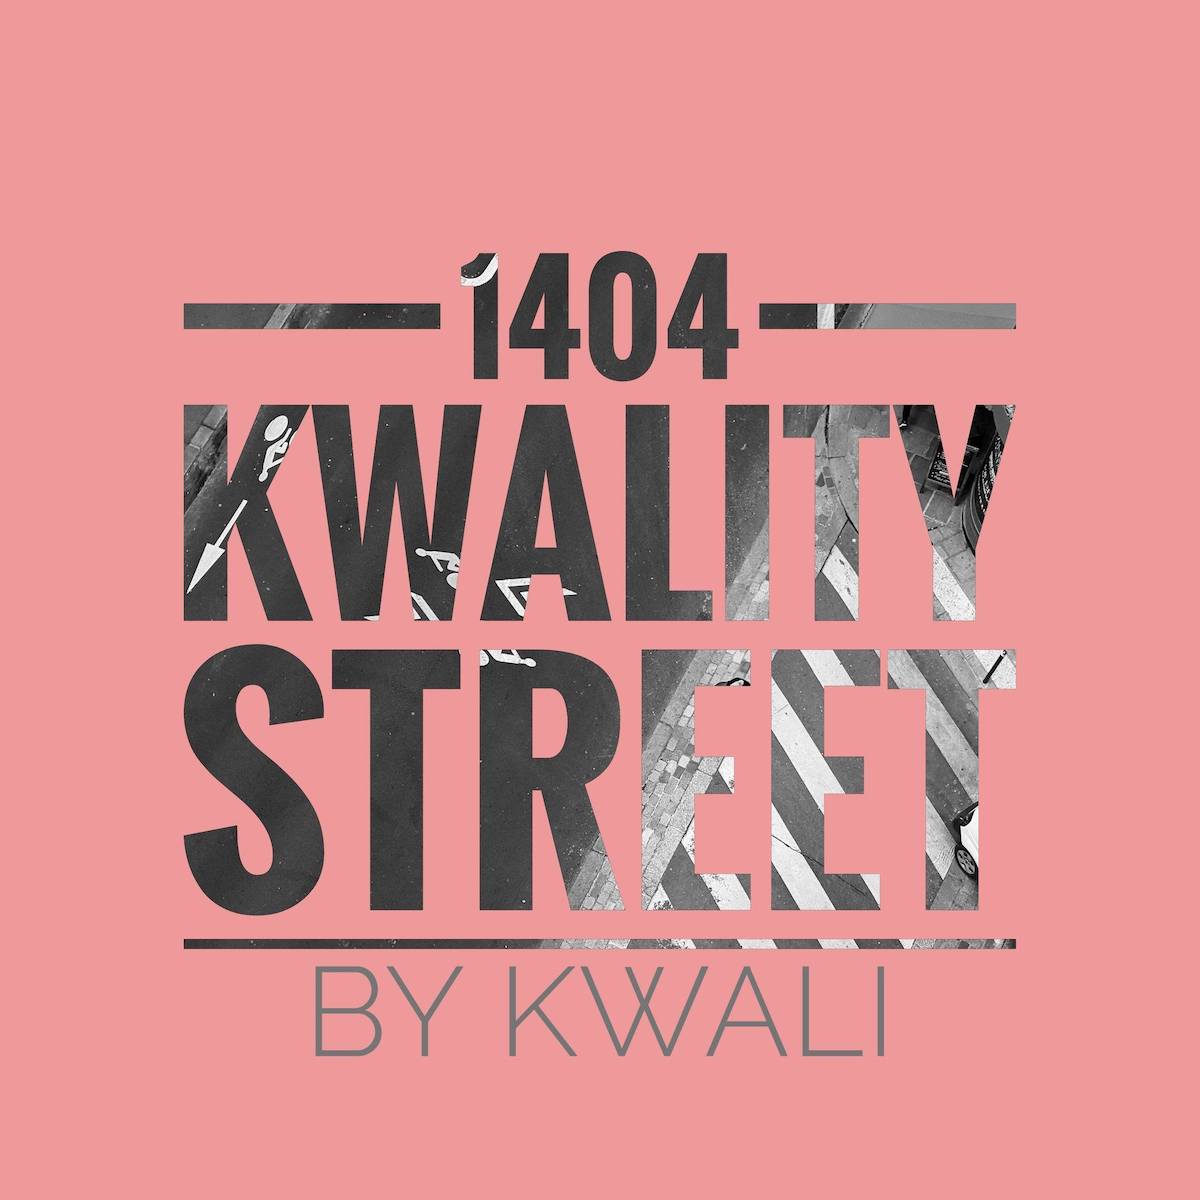 You are currently viewing Le producteur martiniquais Kwali dévoile son premier EP « 1404 Kwality Street » paru le 14 avril 2022